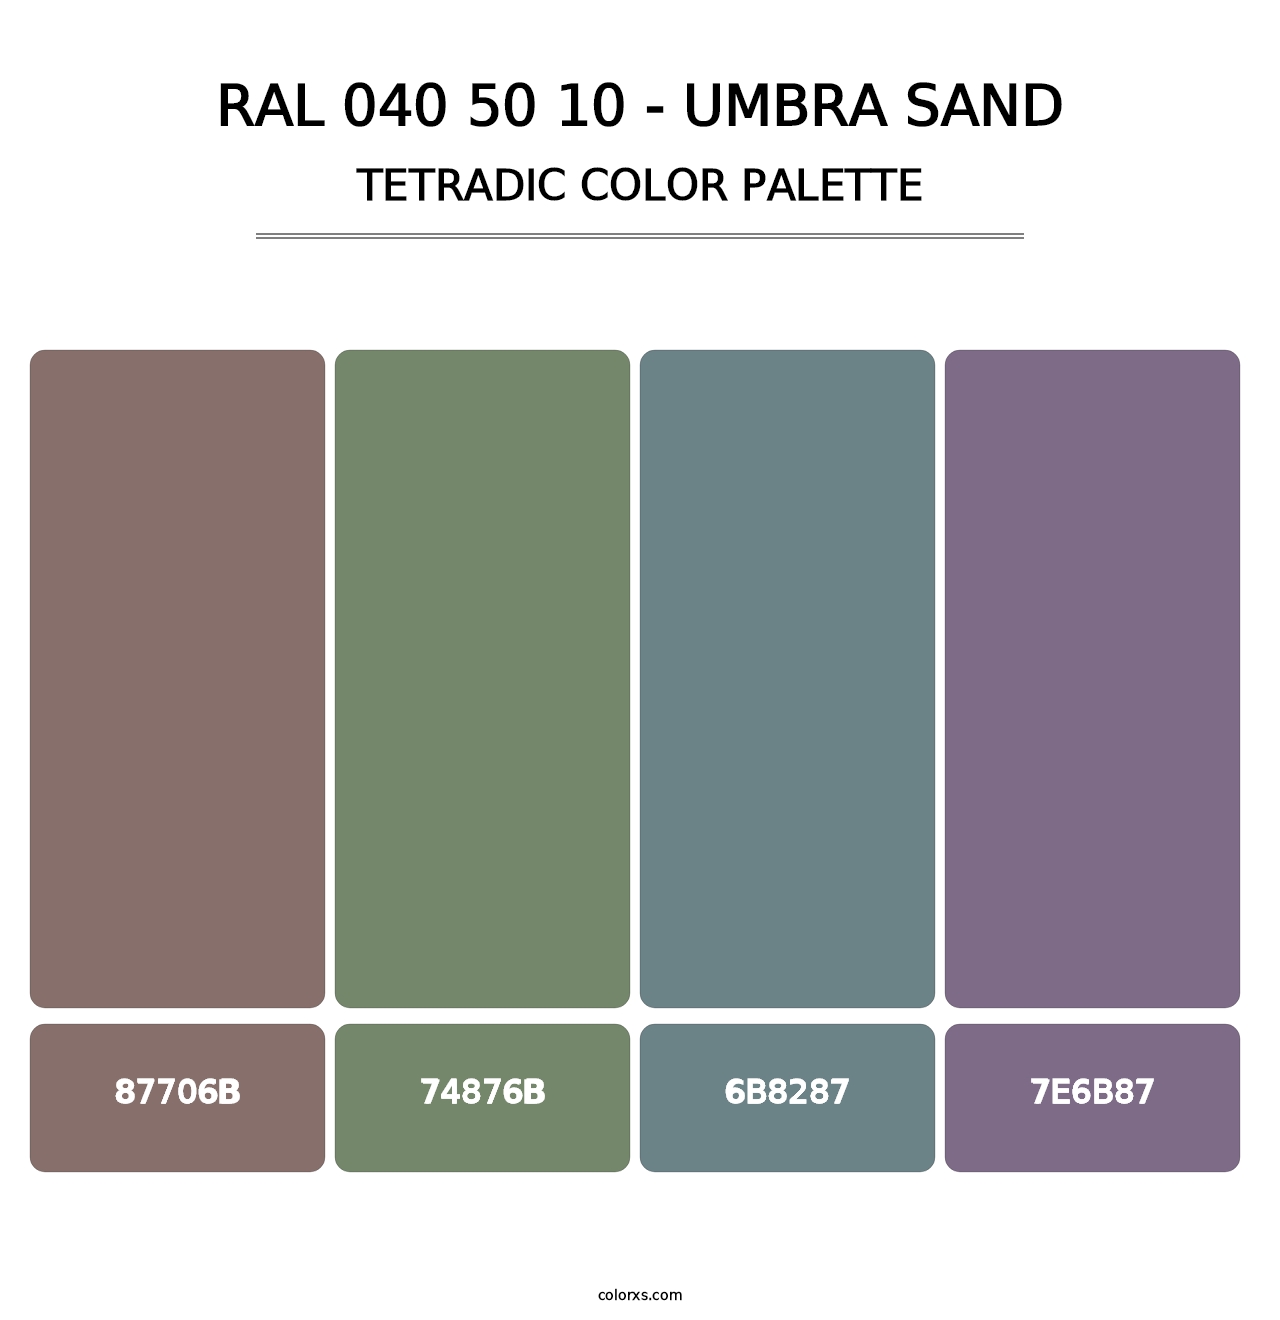 RAL 040 50 10 - Umbra Sand - Tetradic Color Palette